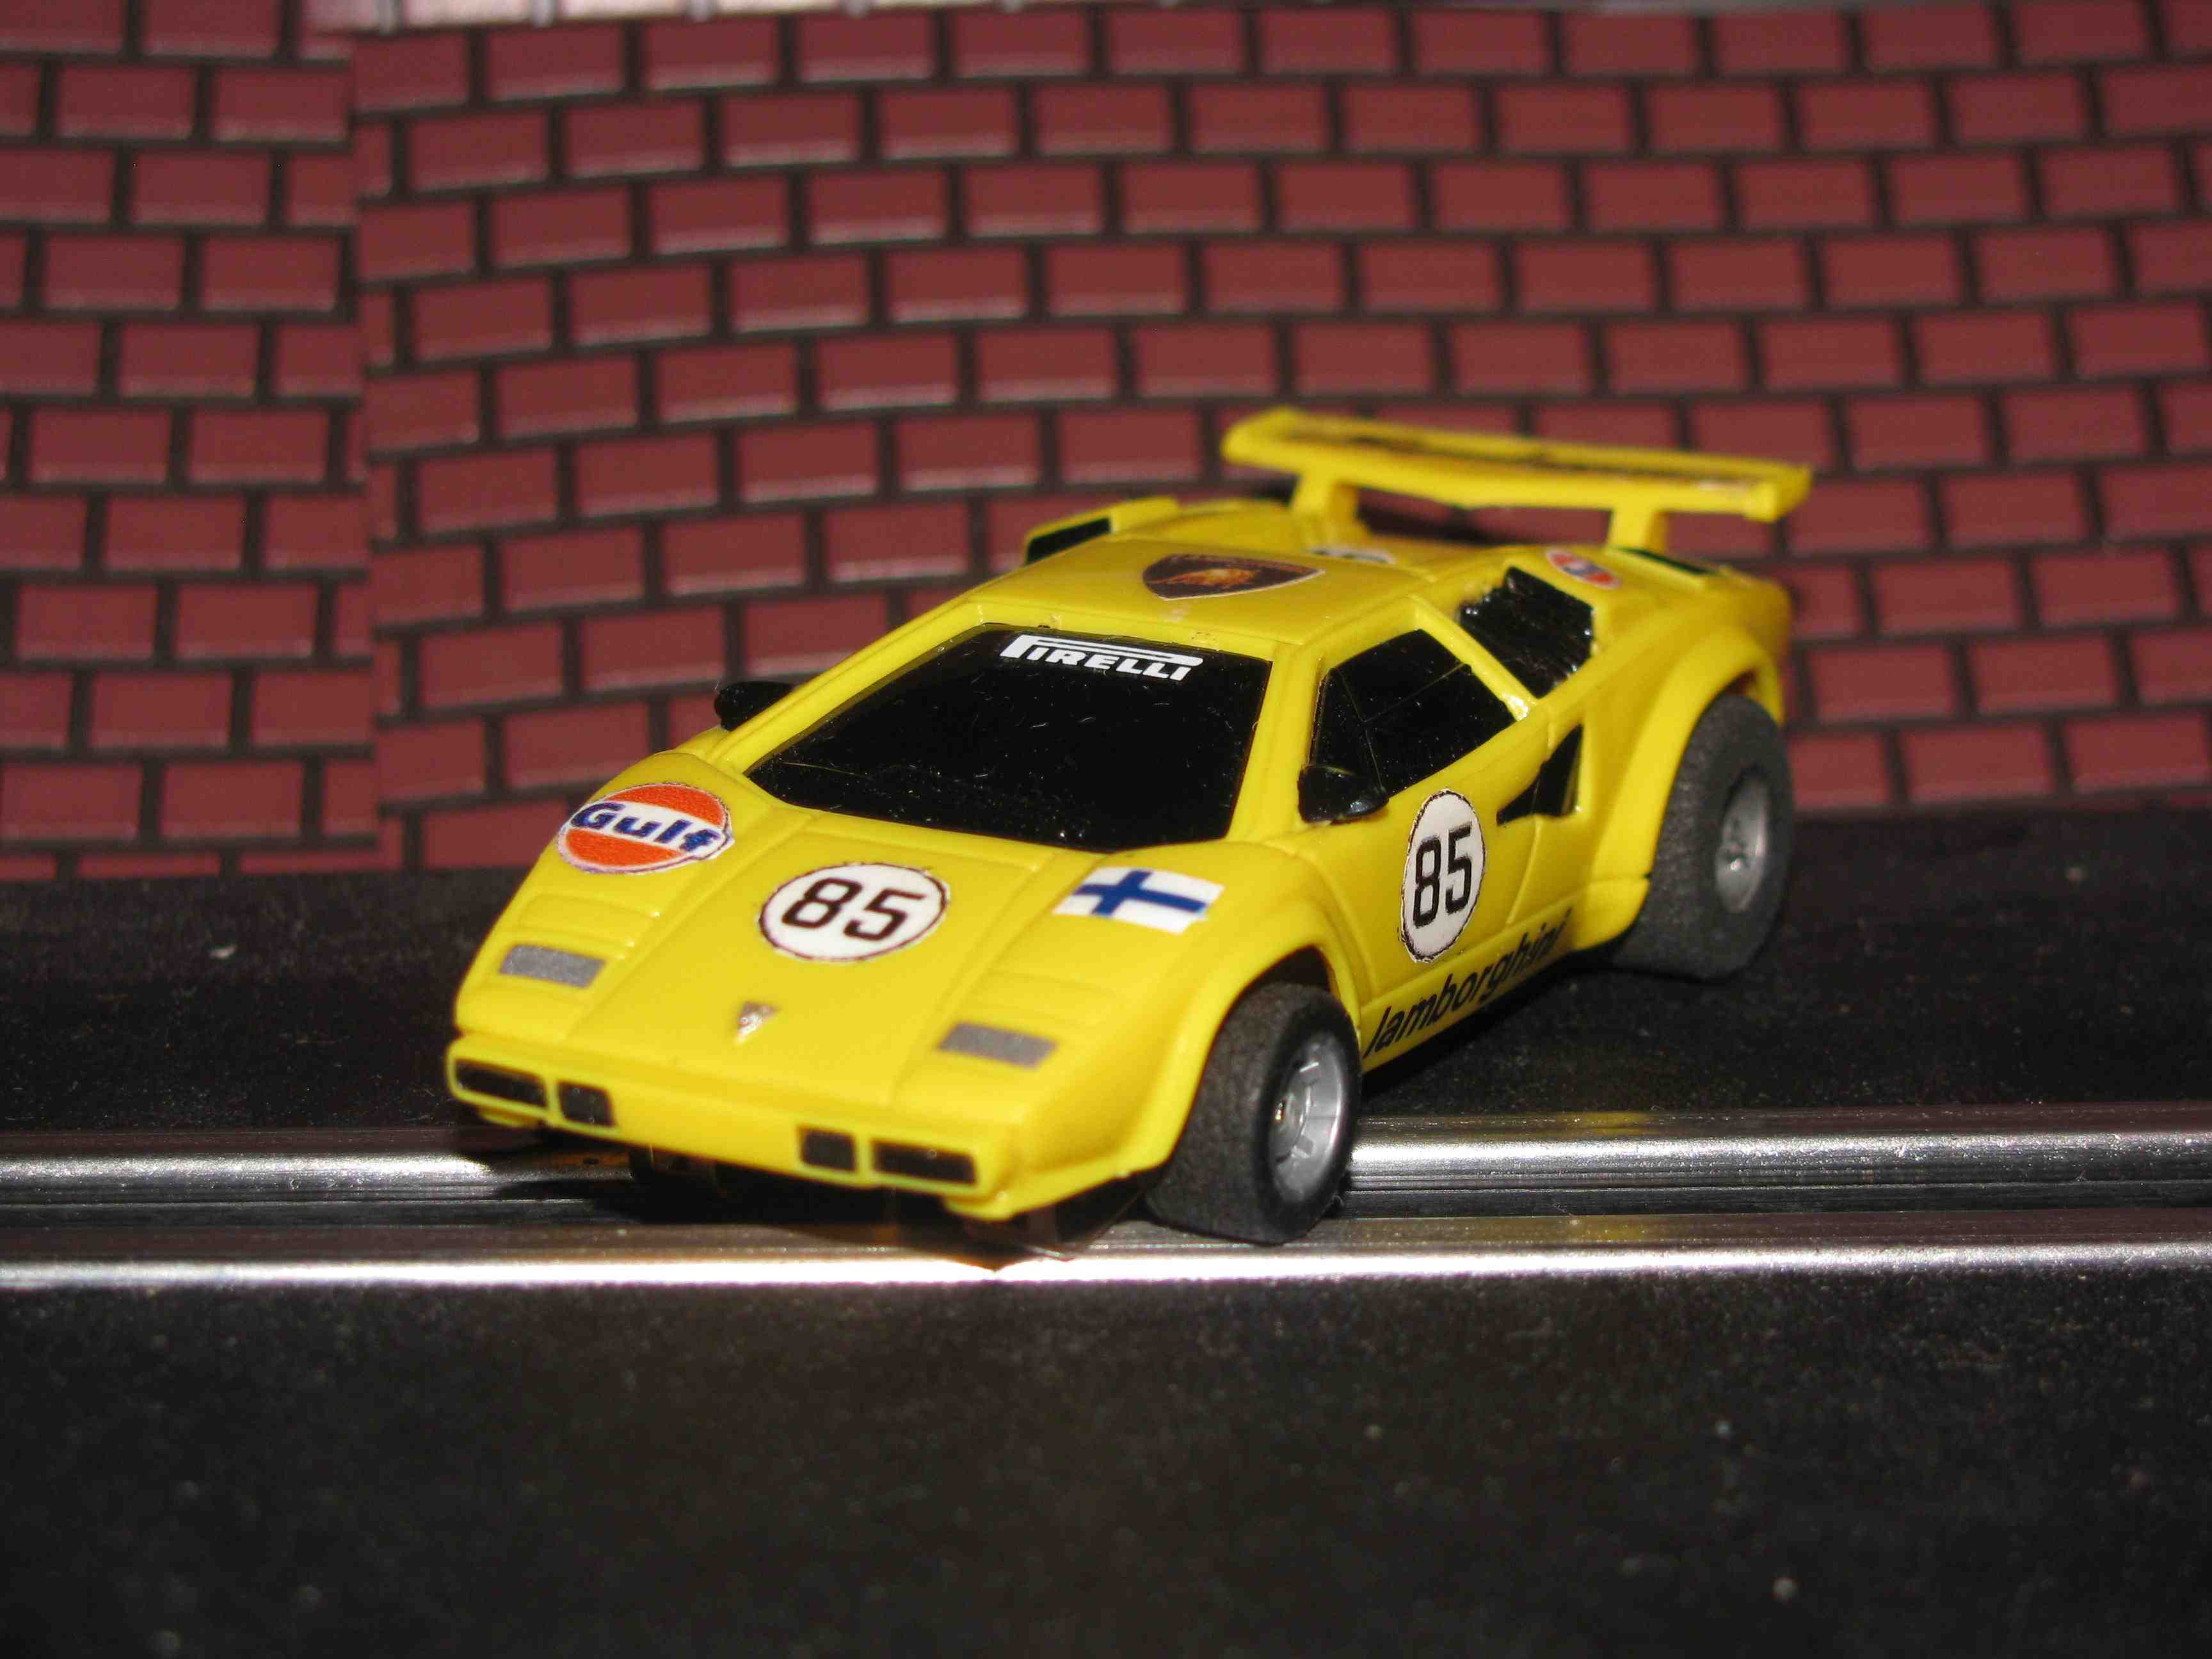 * SOLD * TYCO Lamborghini Coutach LP5000 - HO Slot Car – Yellow - Car#85 – W/Guide Post